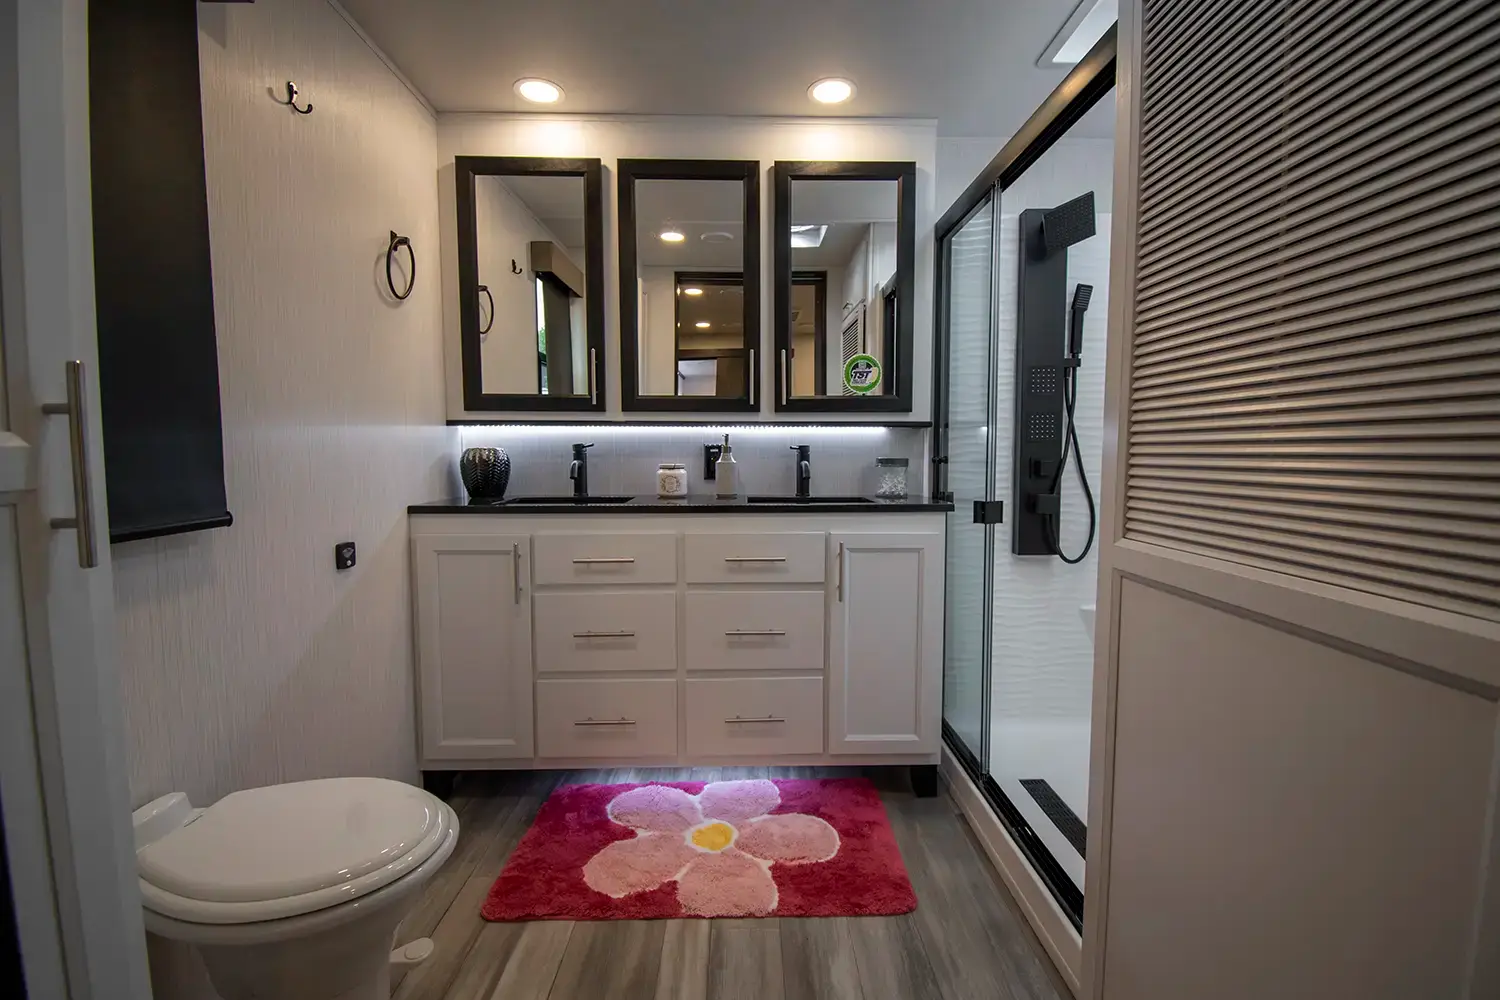 The spacious bathroom with dual vanity facing rear